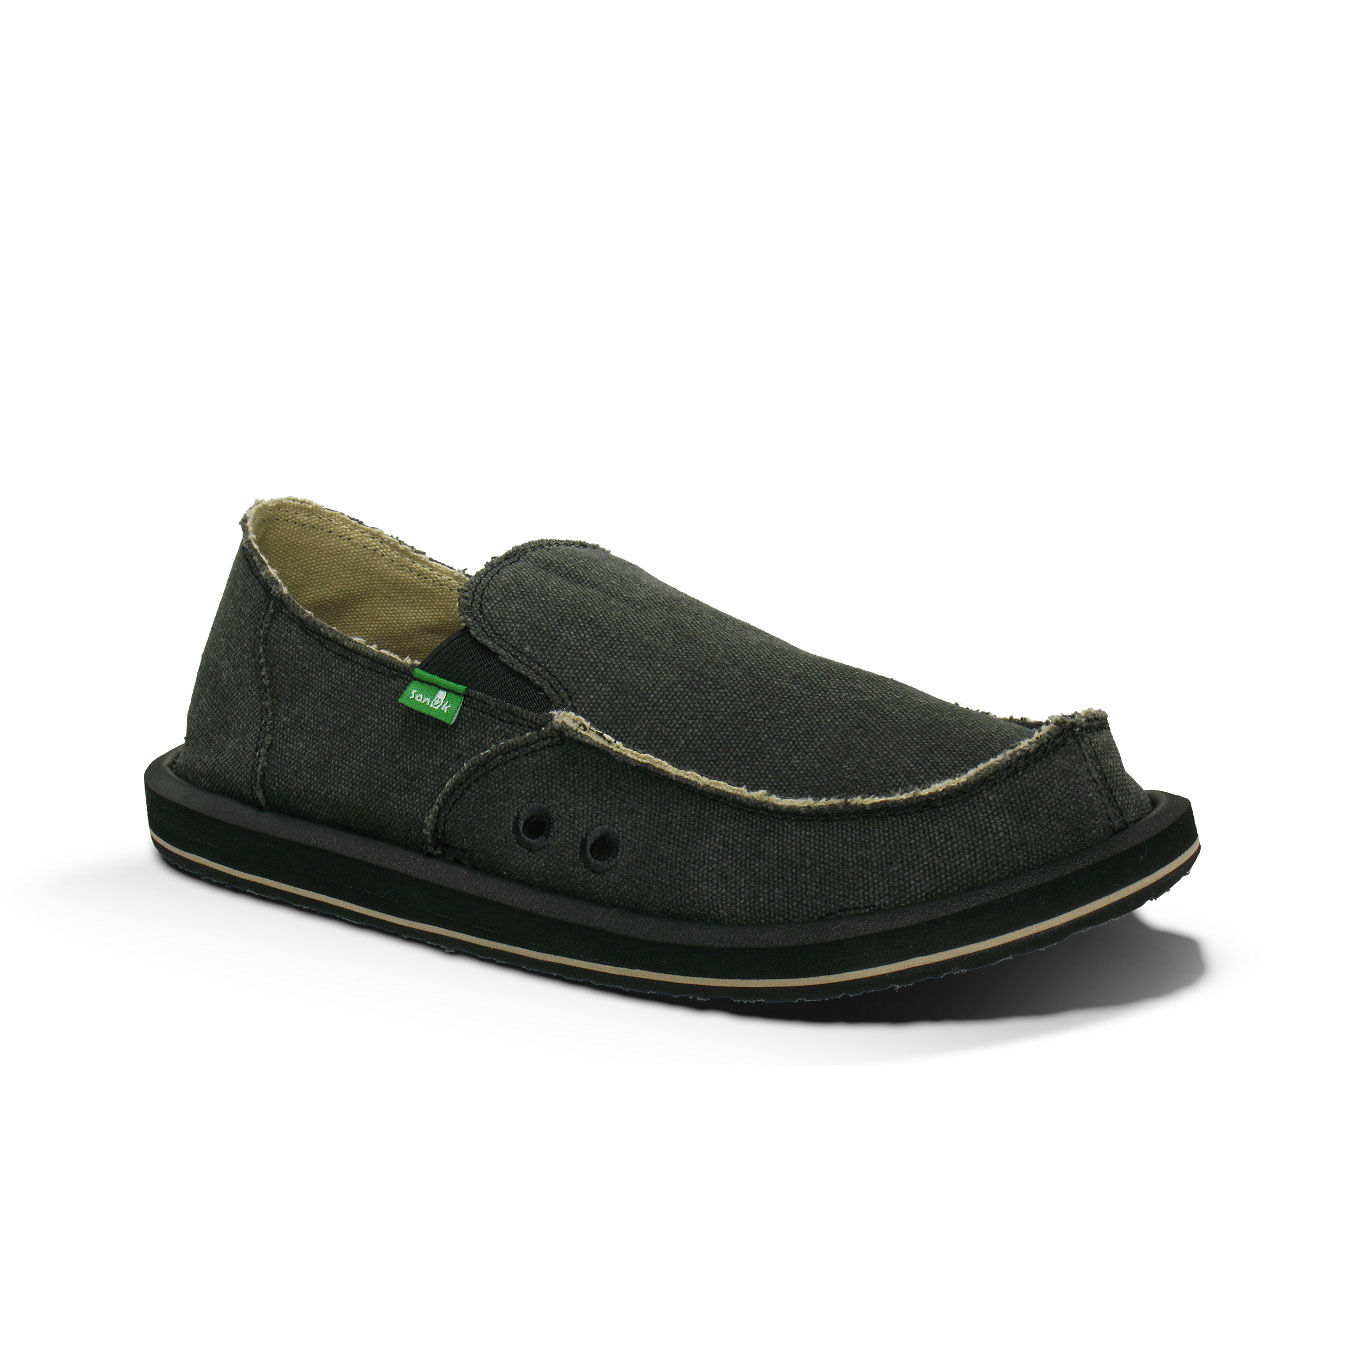 Sanuk Men's Vagabond Shoes | eBay